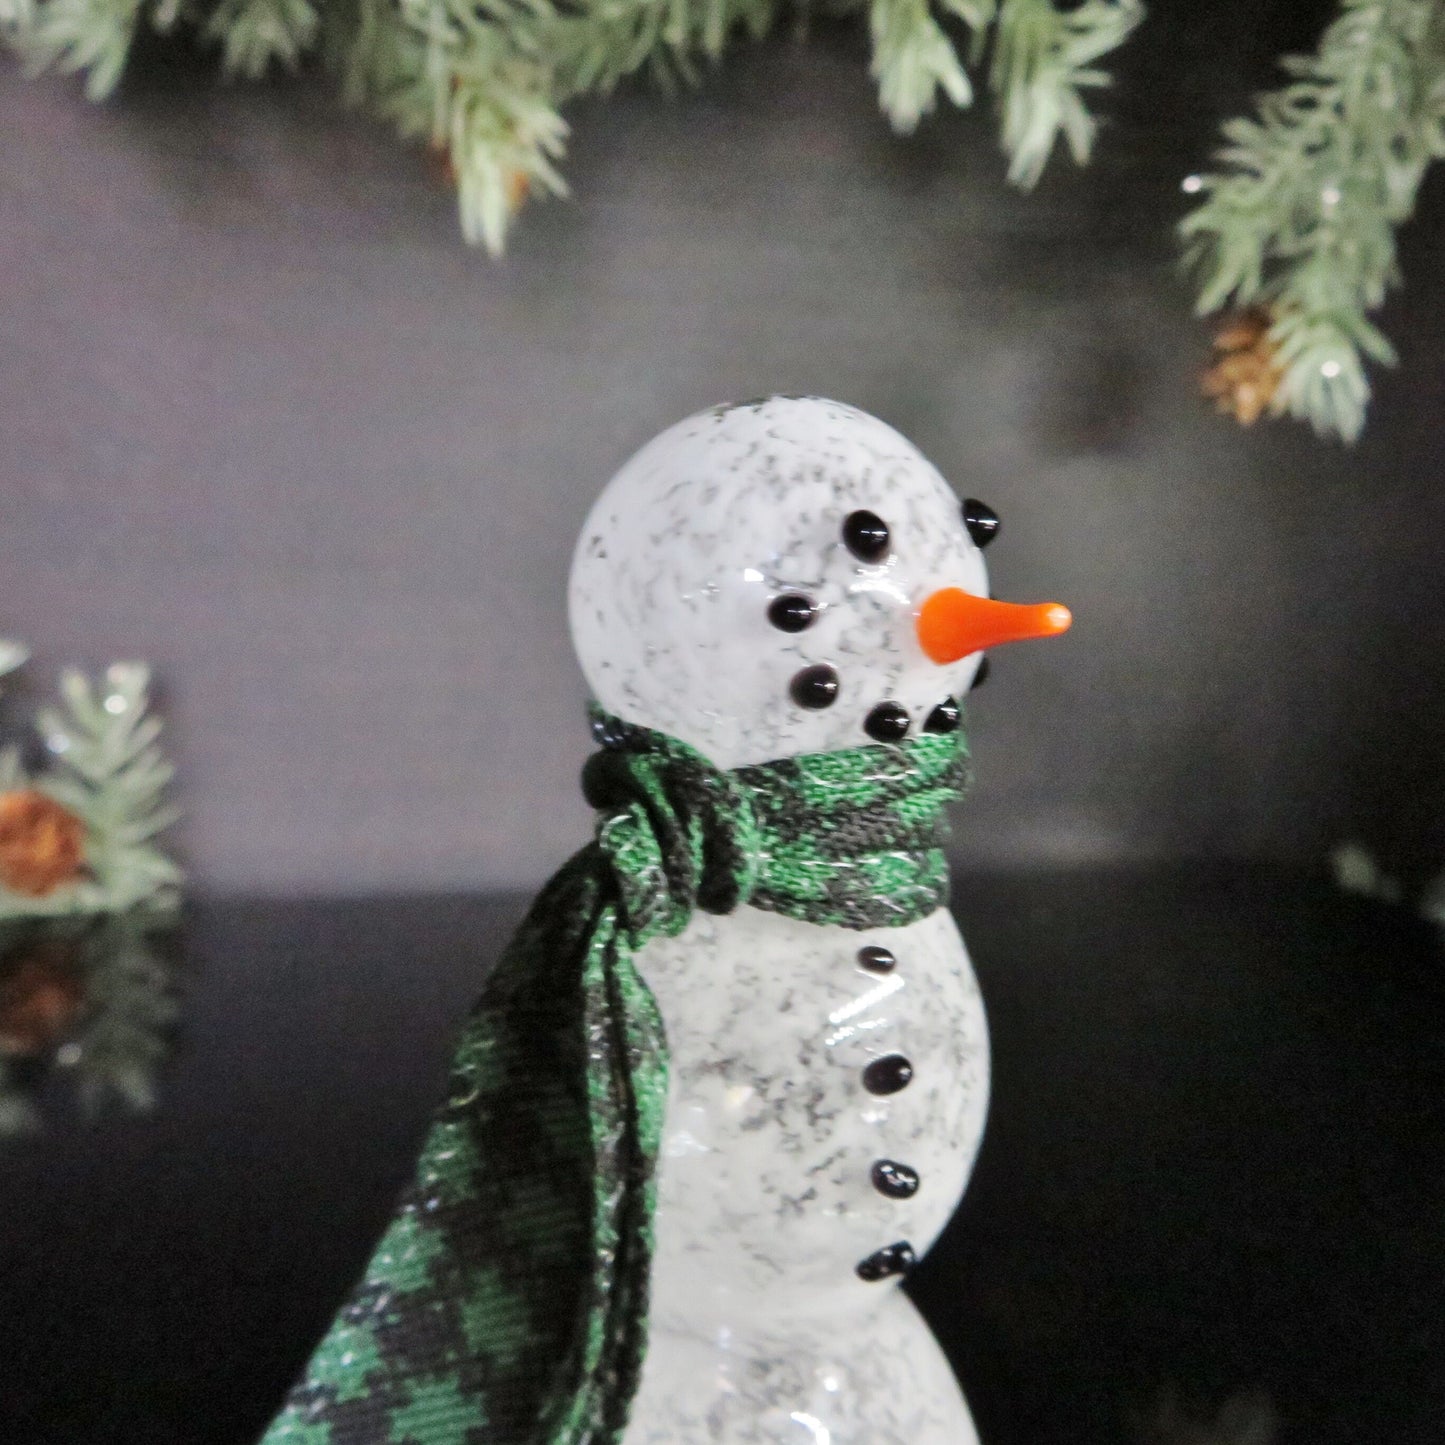 Handblown Glass Snowman Ornament & Figurine Collection